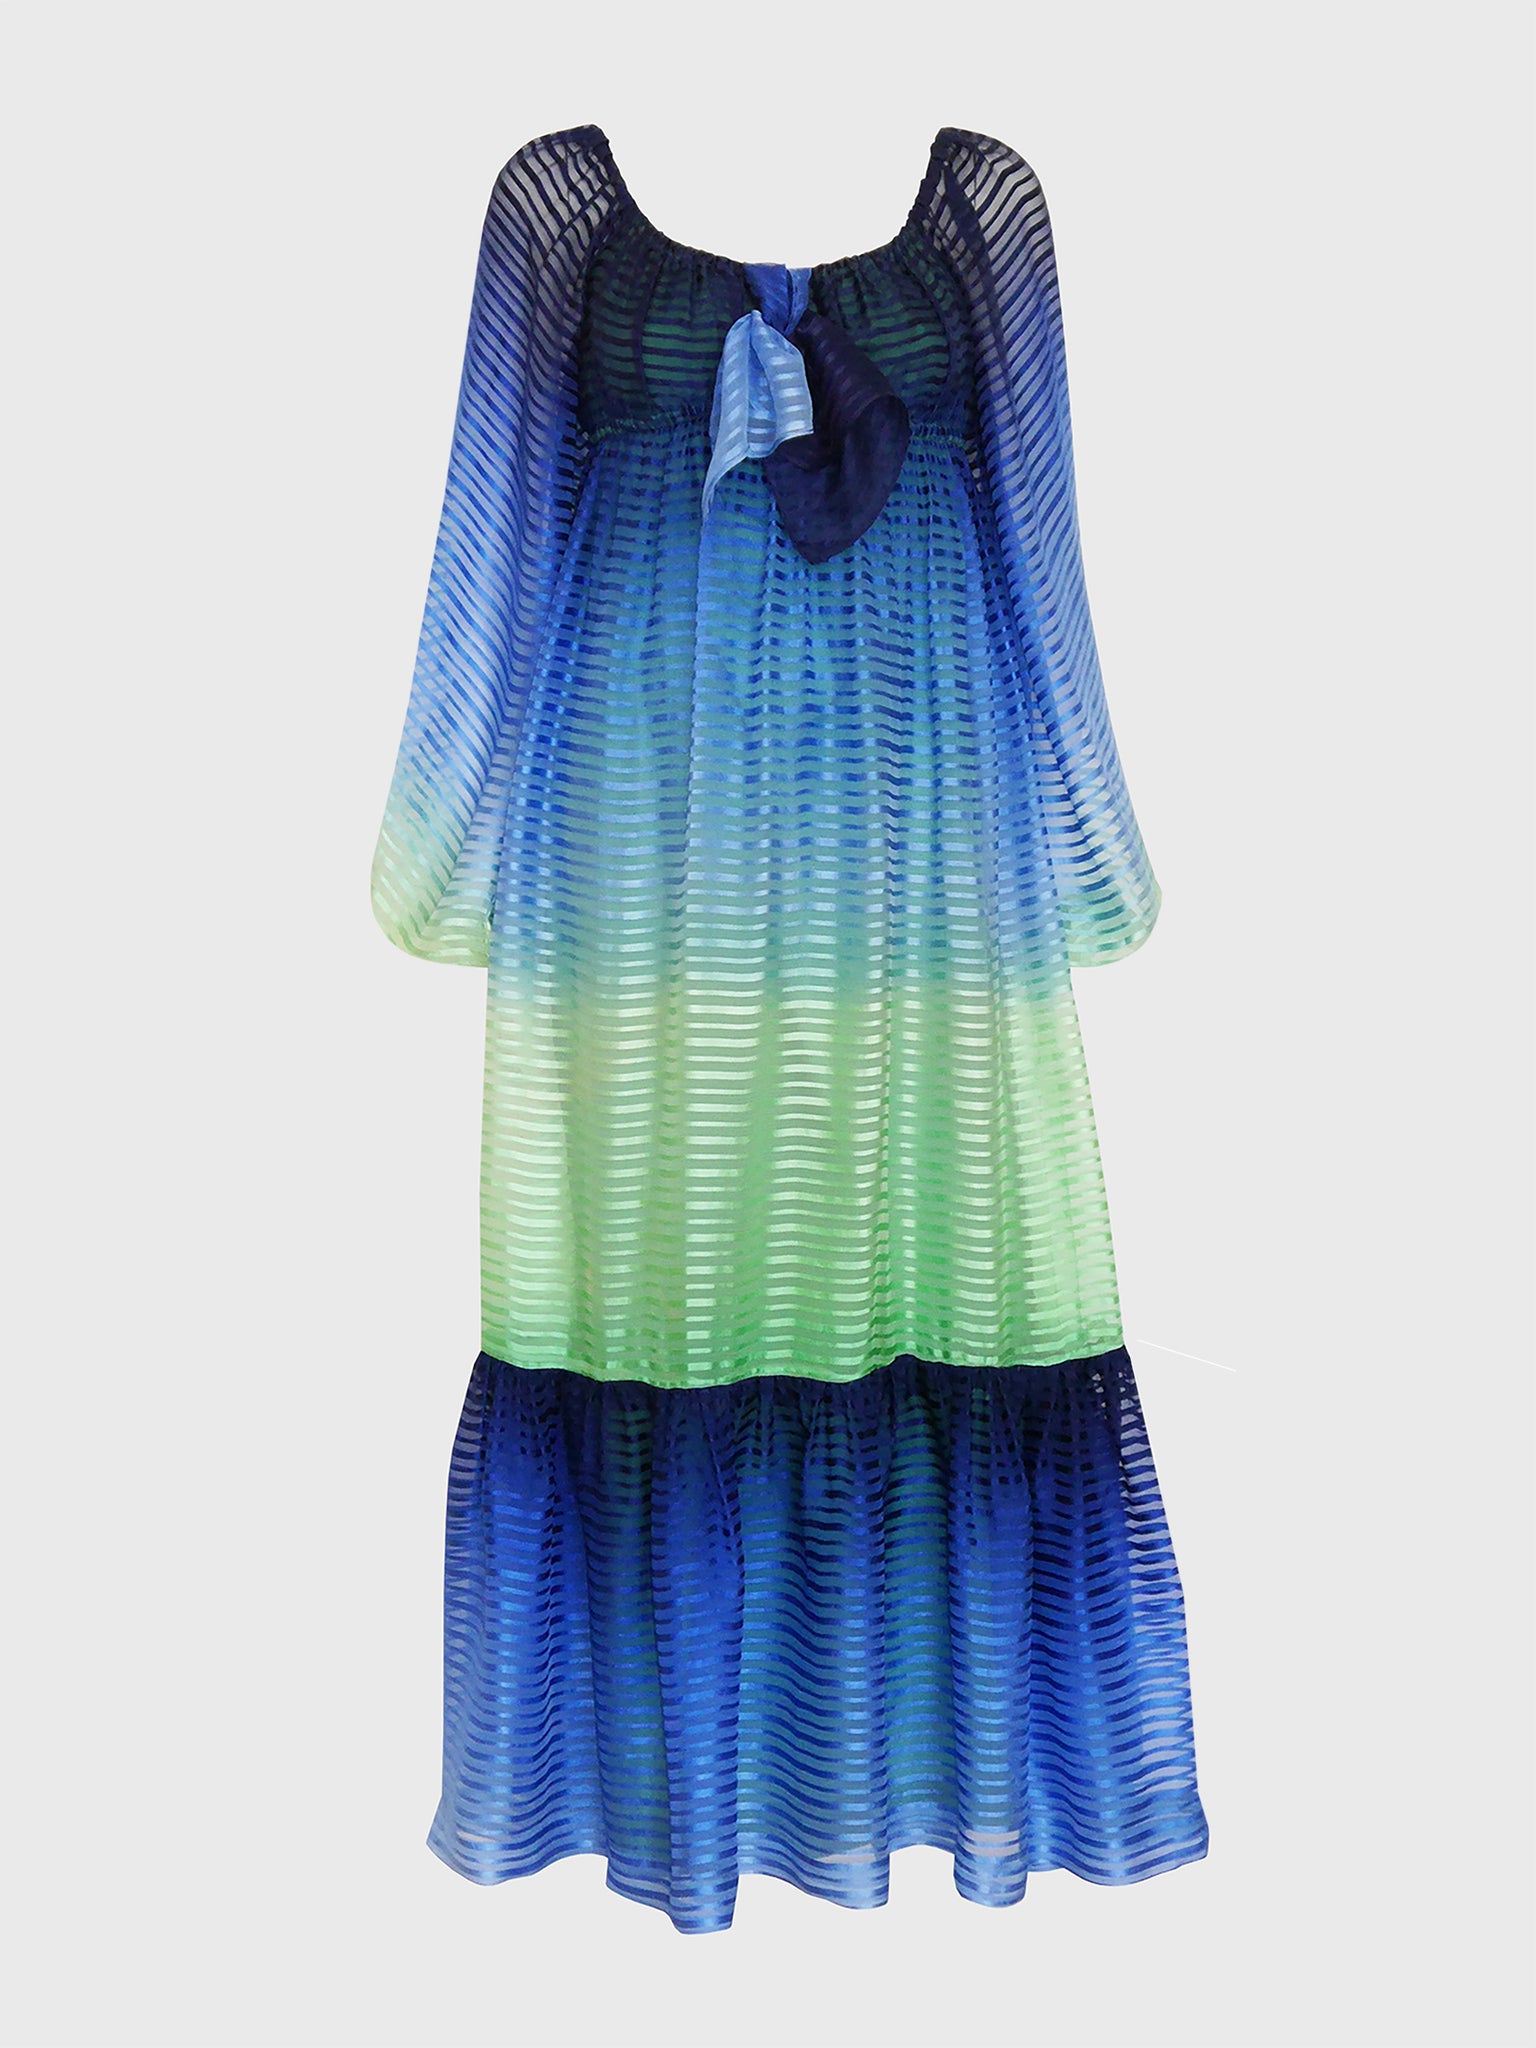 GIVENCHY c. 1977 Vintage Ombré Silk Chiffon Maxi Evening Dress